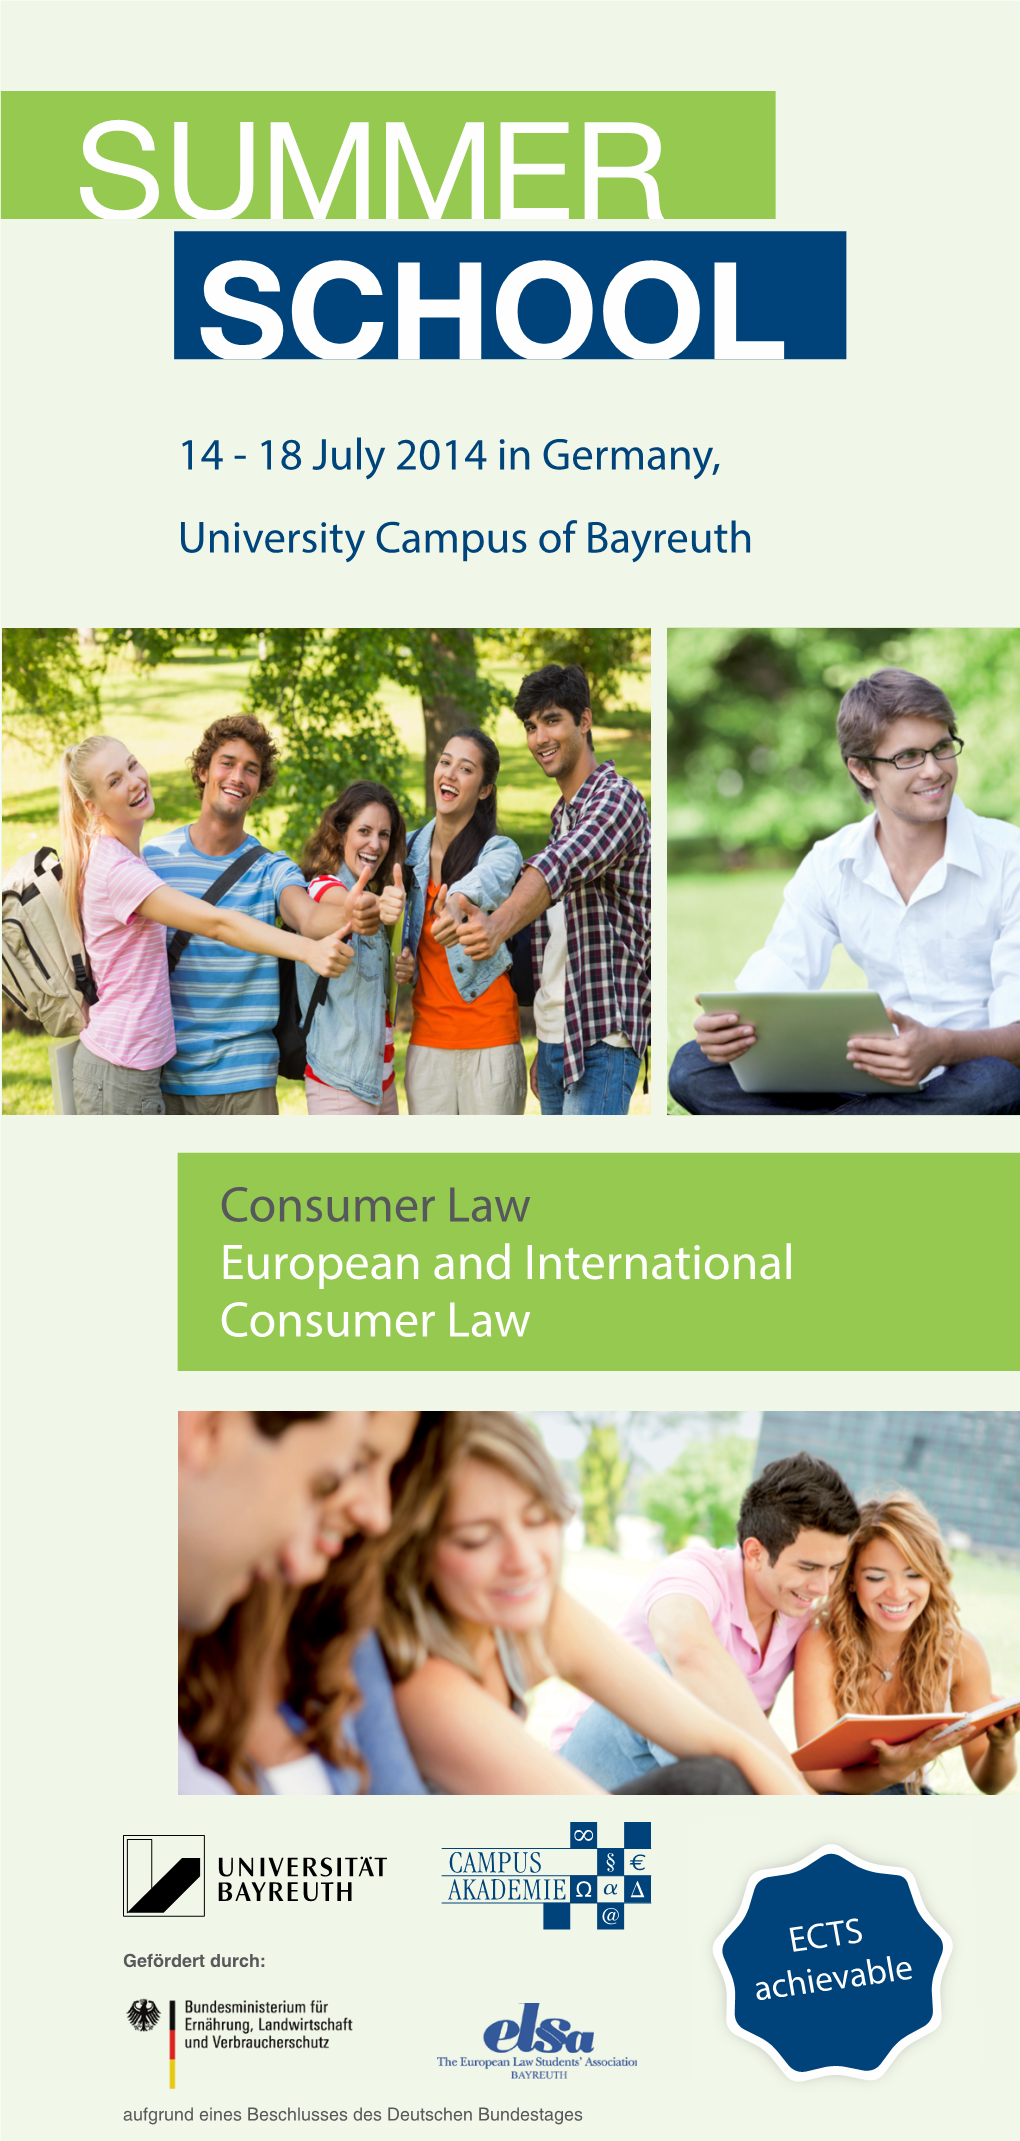 Consumer Law European and International Consumer Law